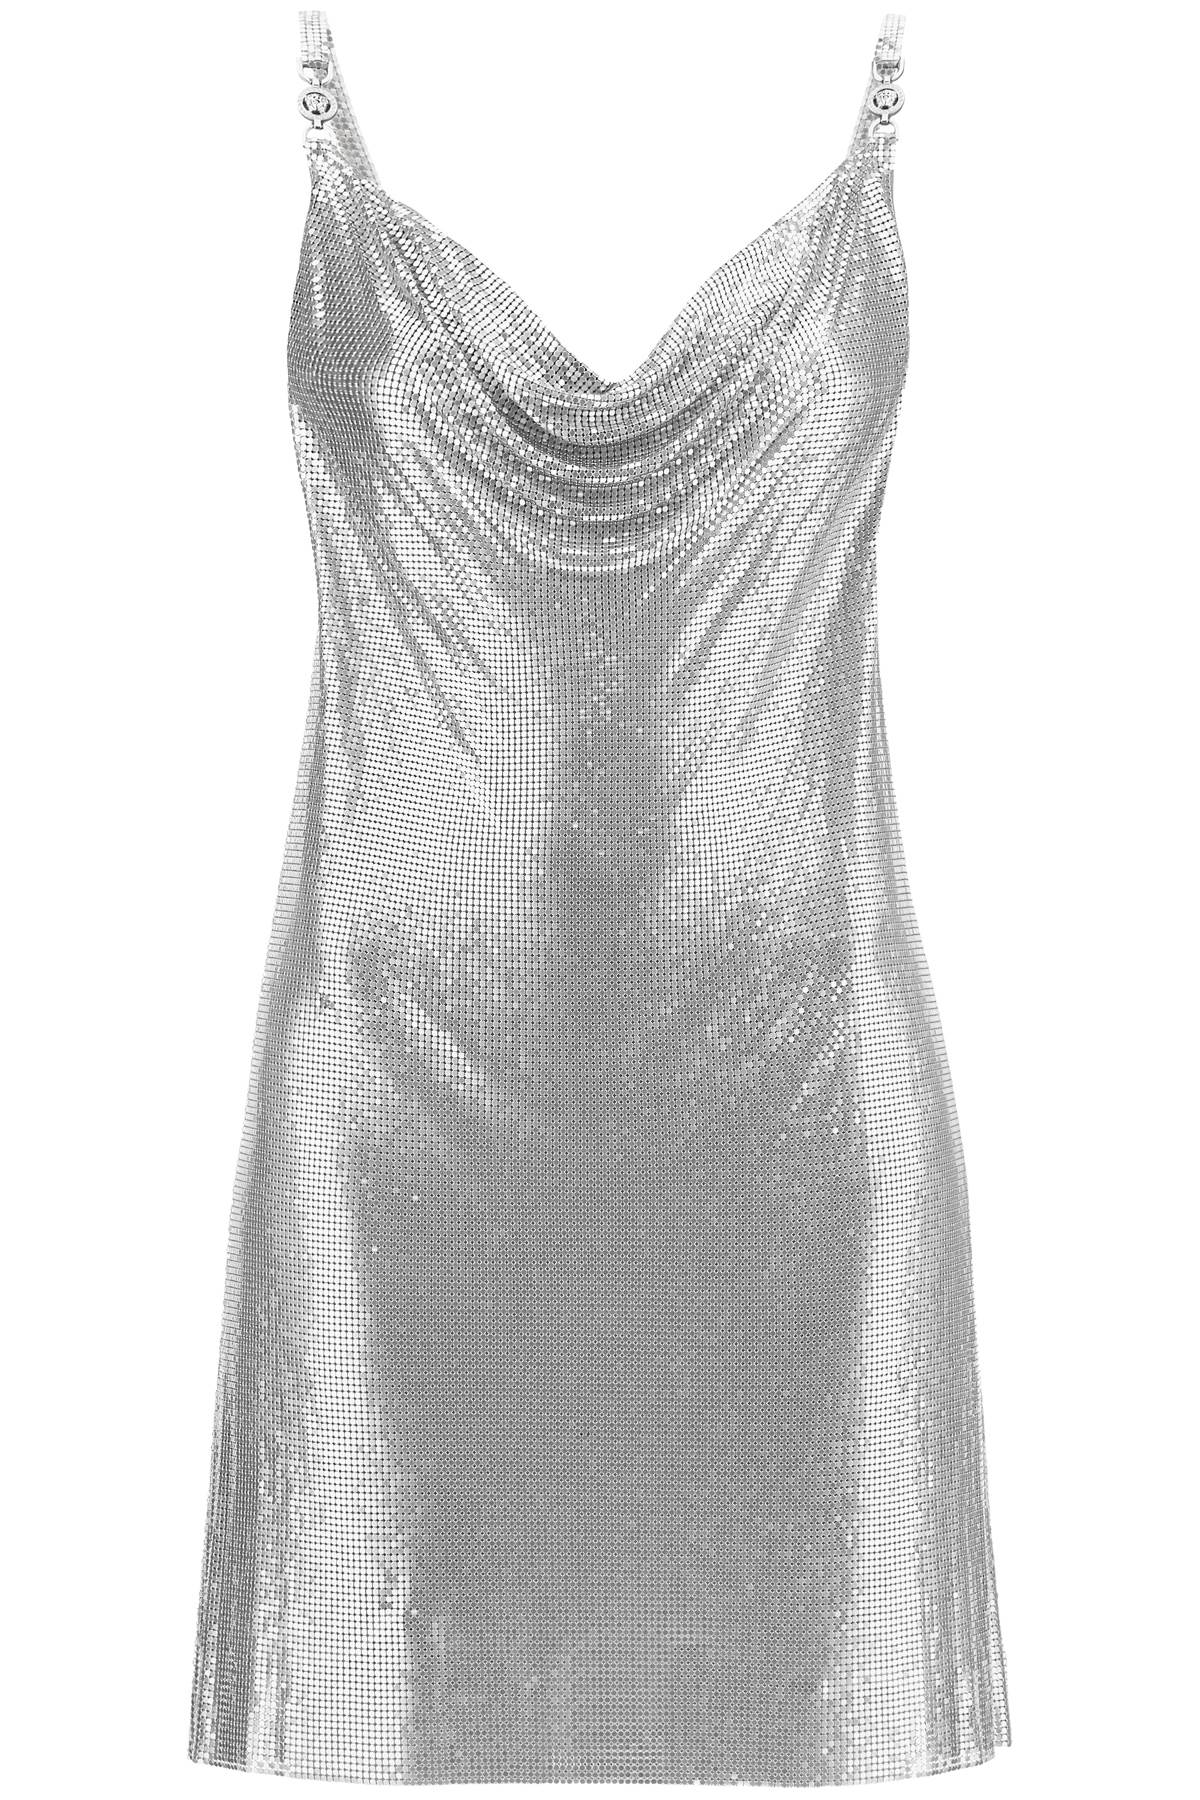 Versace VERSACE mini metallic knit dress